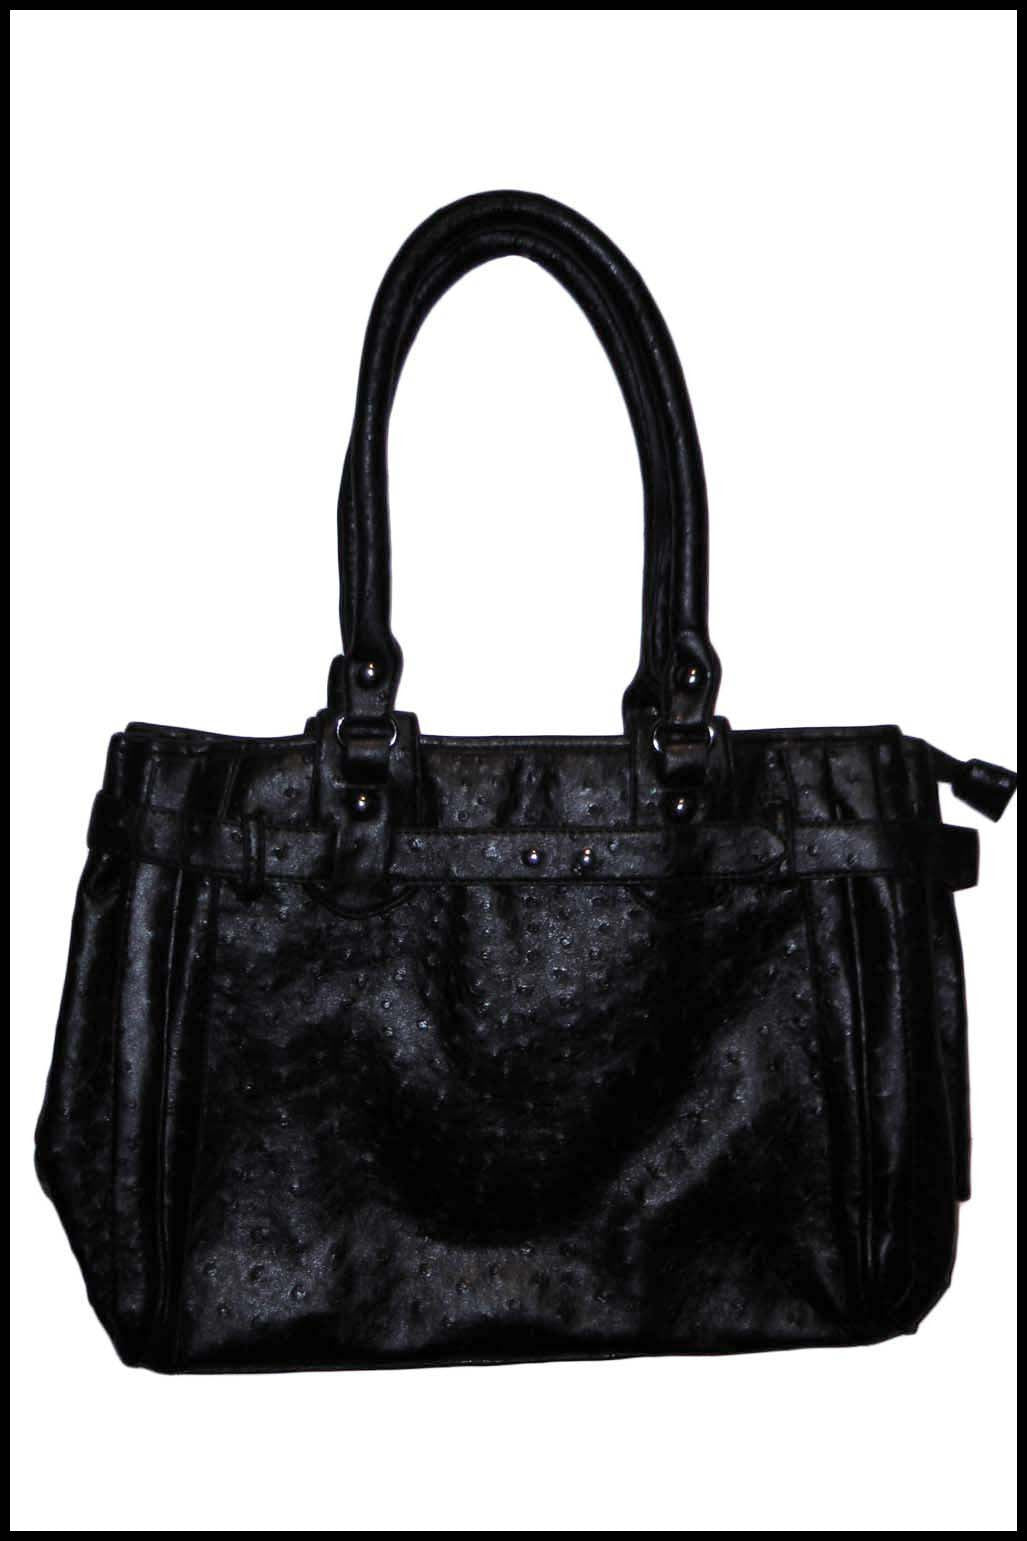 Ostrich Print Handbag with Belt Detailing